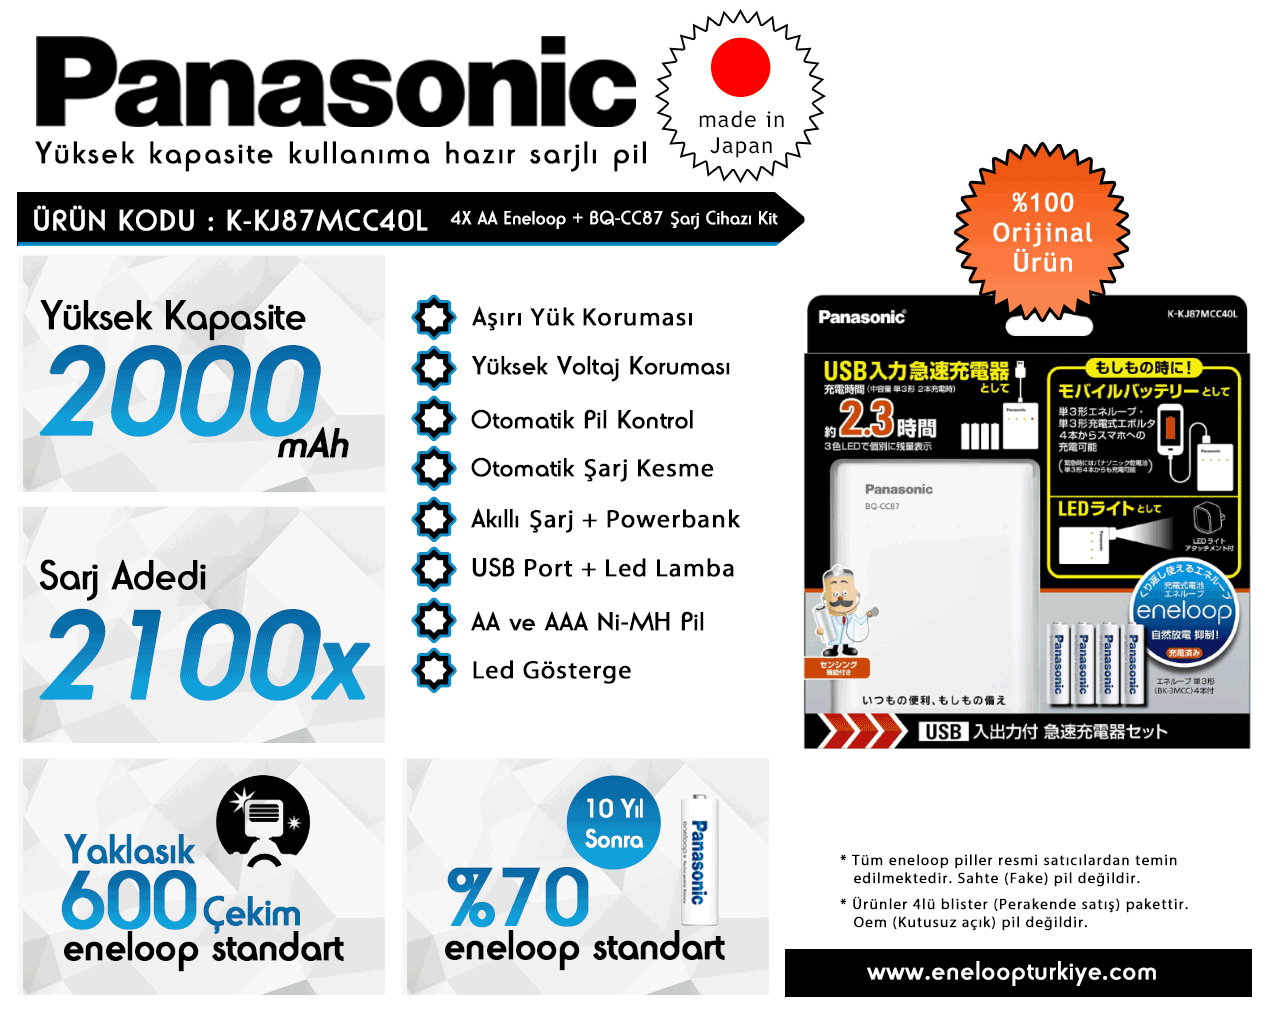 Panasonic Eneloop Lite Standart Pro Piller ve Nitecore, Xtar, Opus, Liitokala Pro Şarj Cihazları